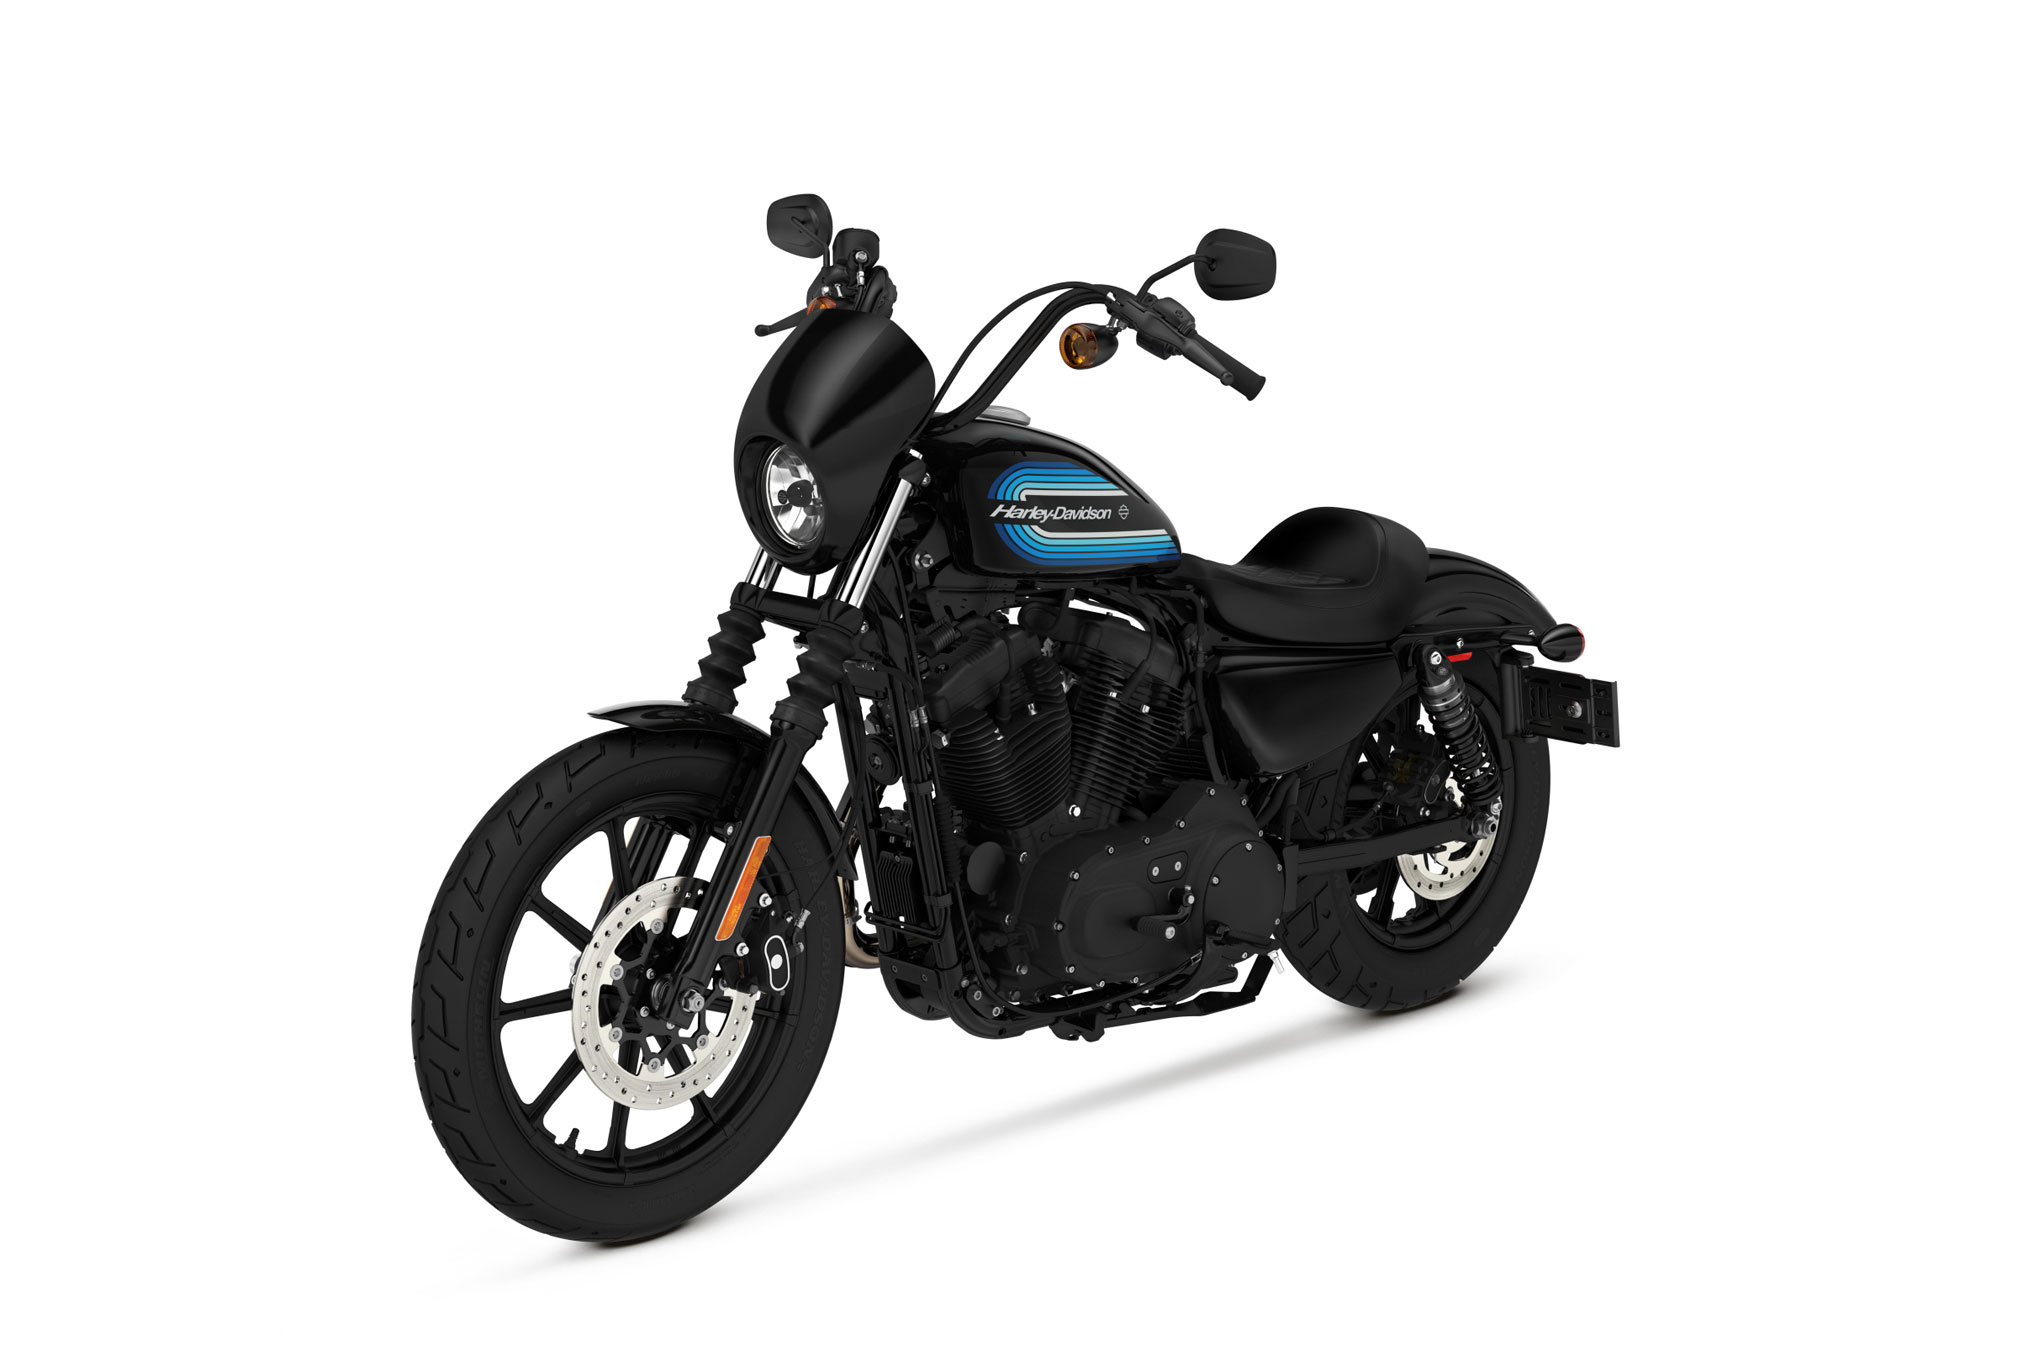 2018 Harley Davidson Iron 1200 Review Total Motorcycle